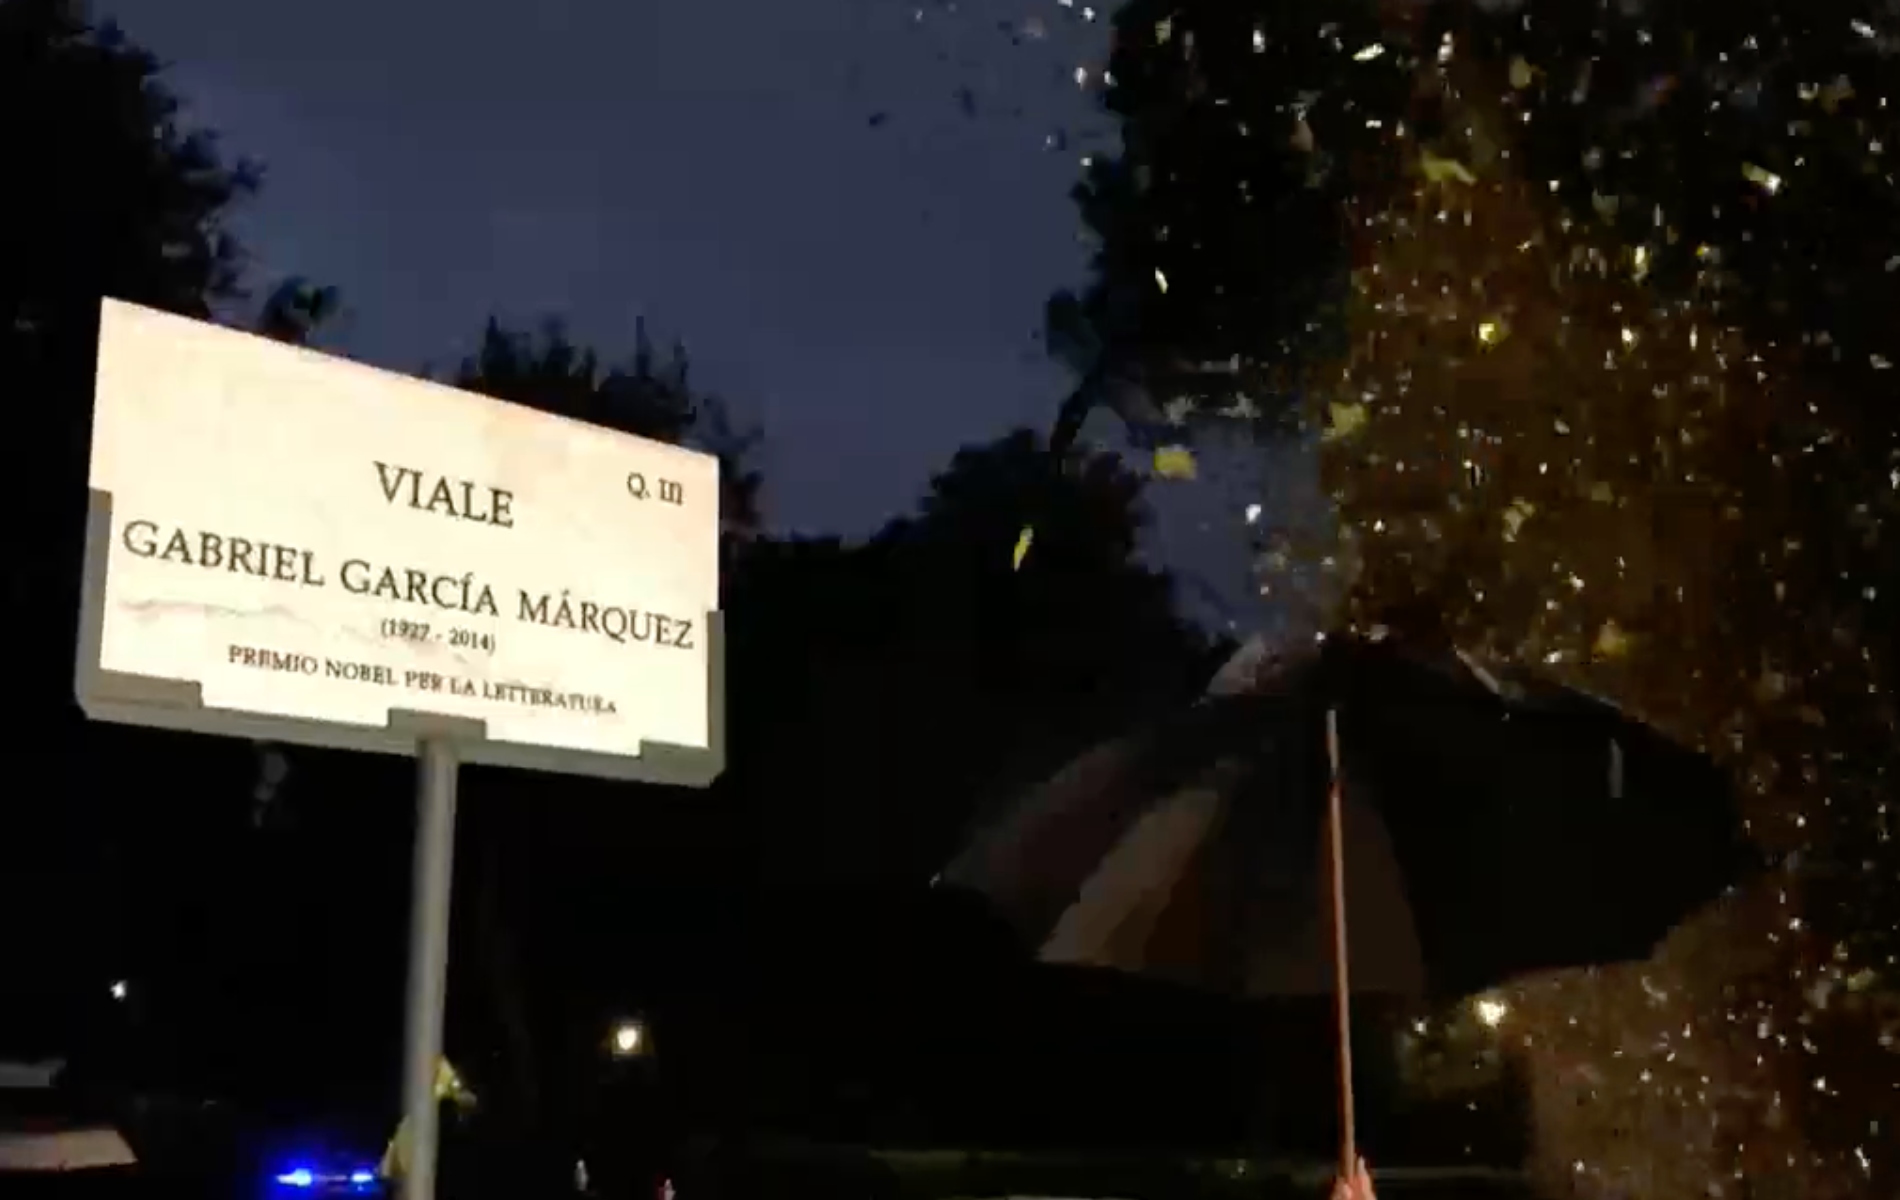 Calle - Gabriel García Márquez en Rome